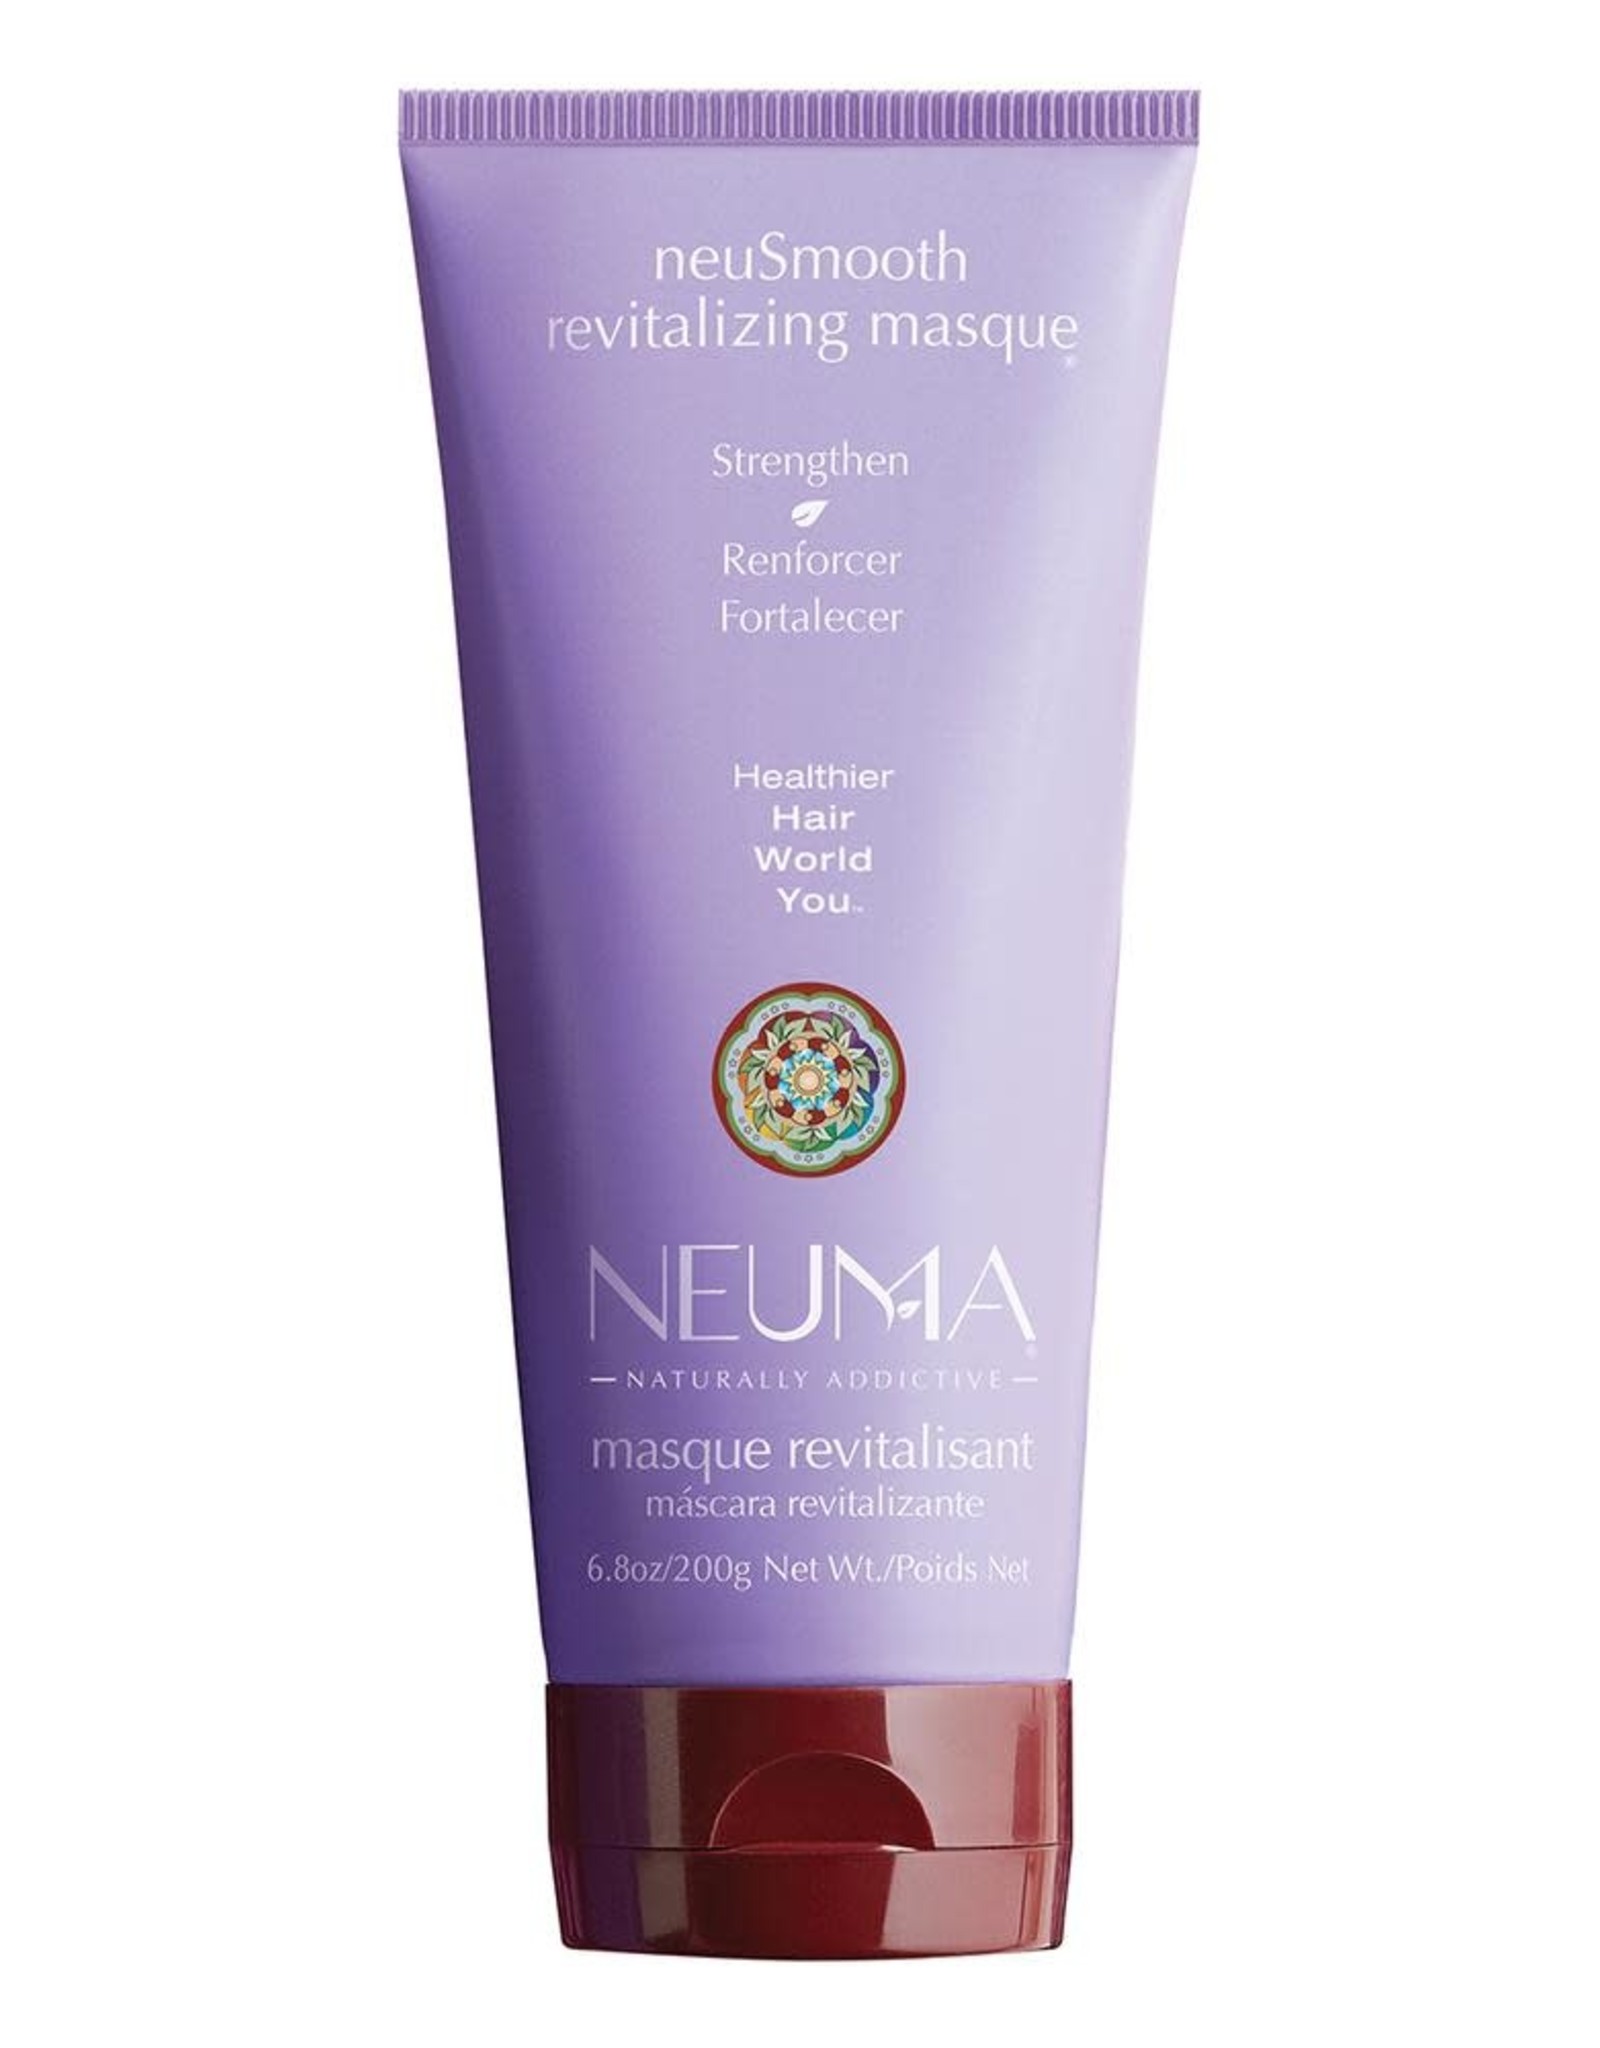 Neuma neuSmooth Revitalizing Masque